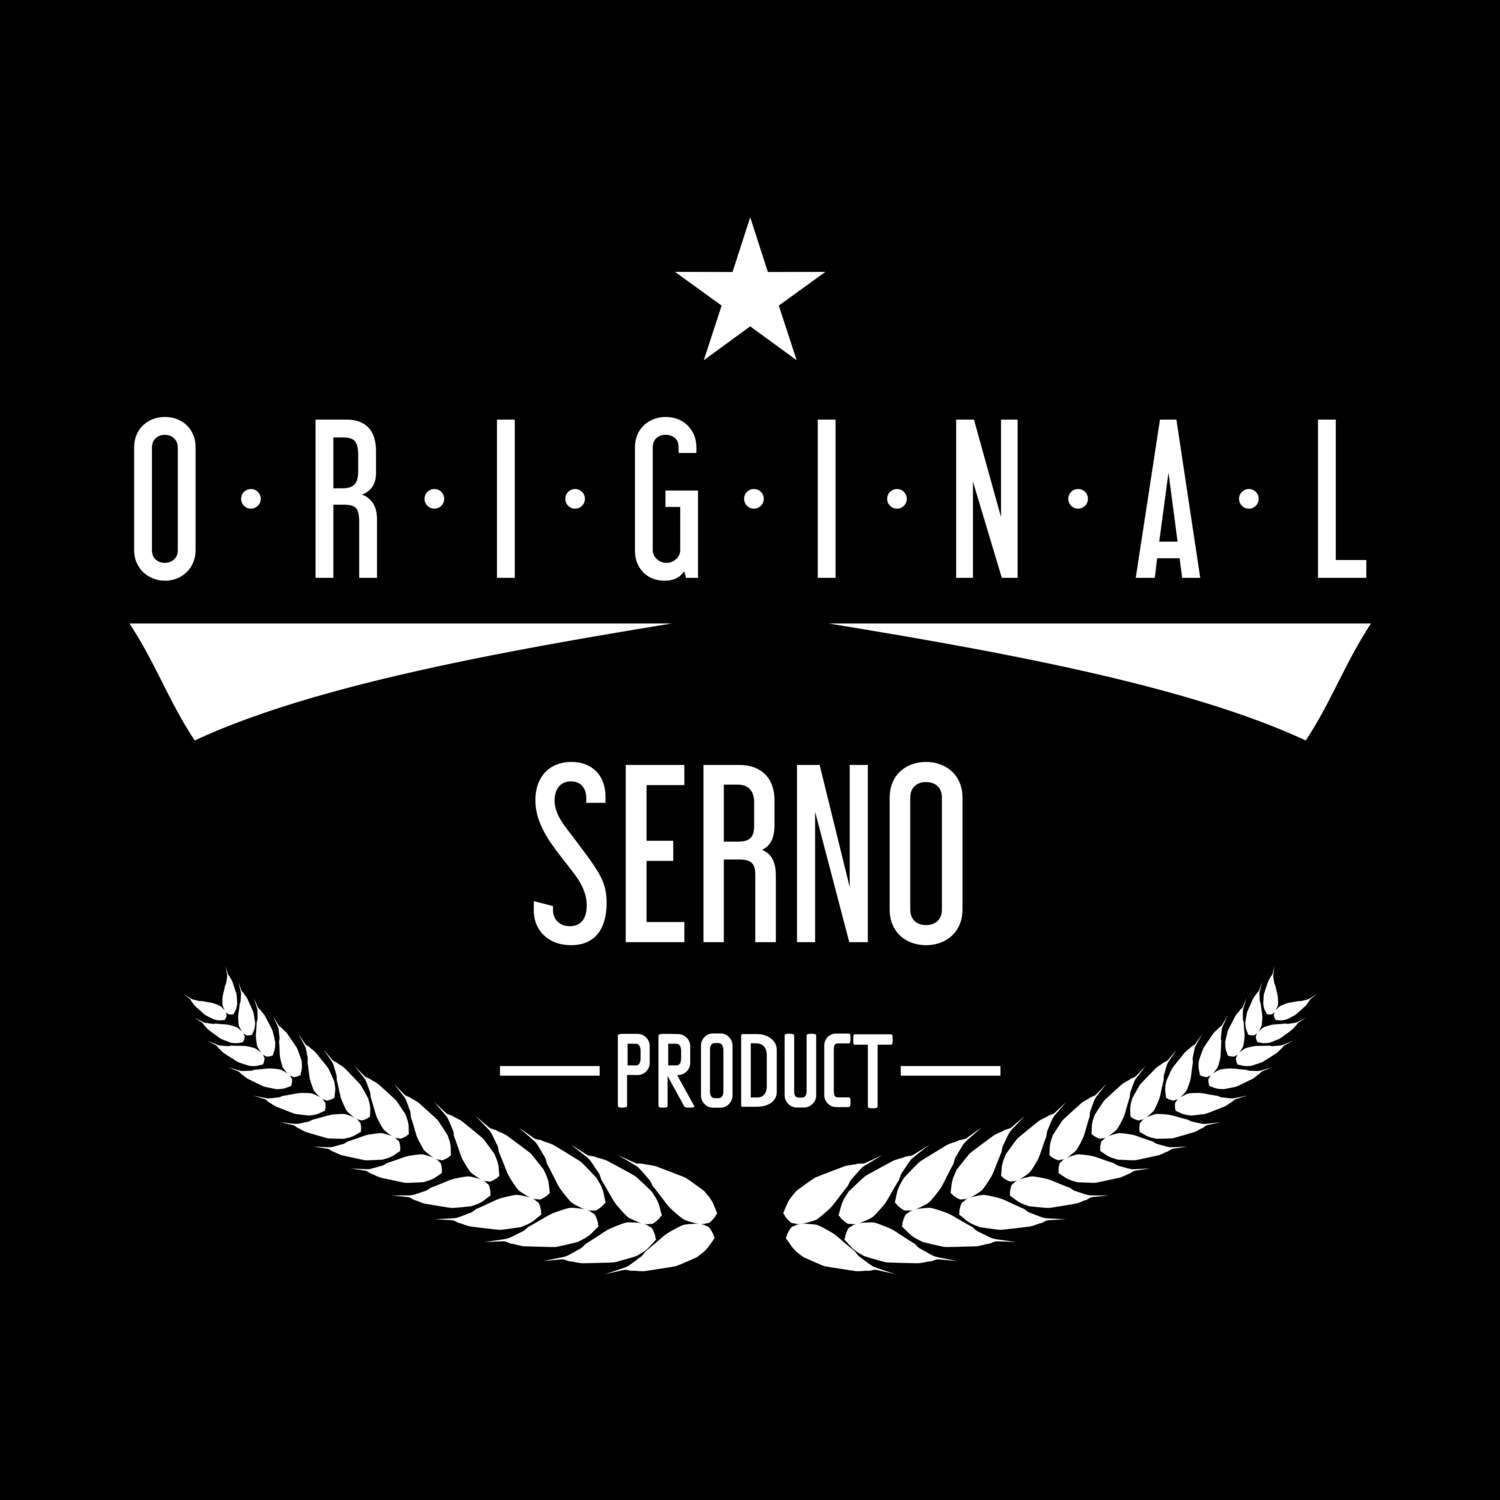 Serno T-Shirt »Original Product«